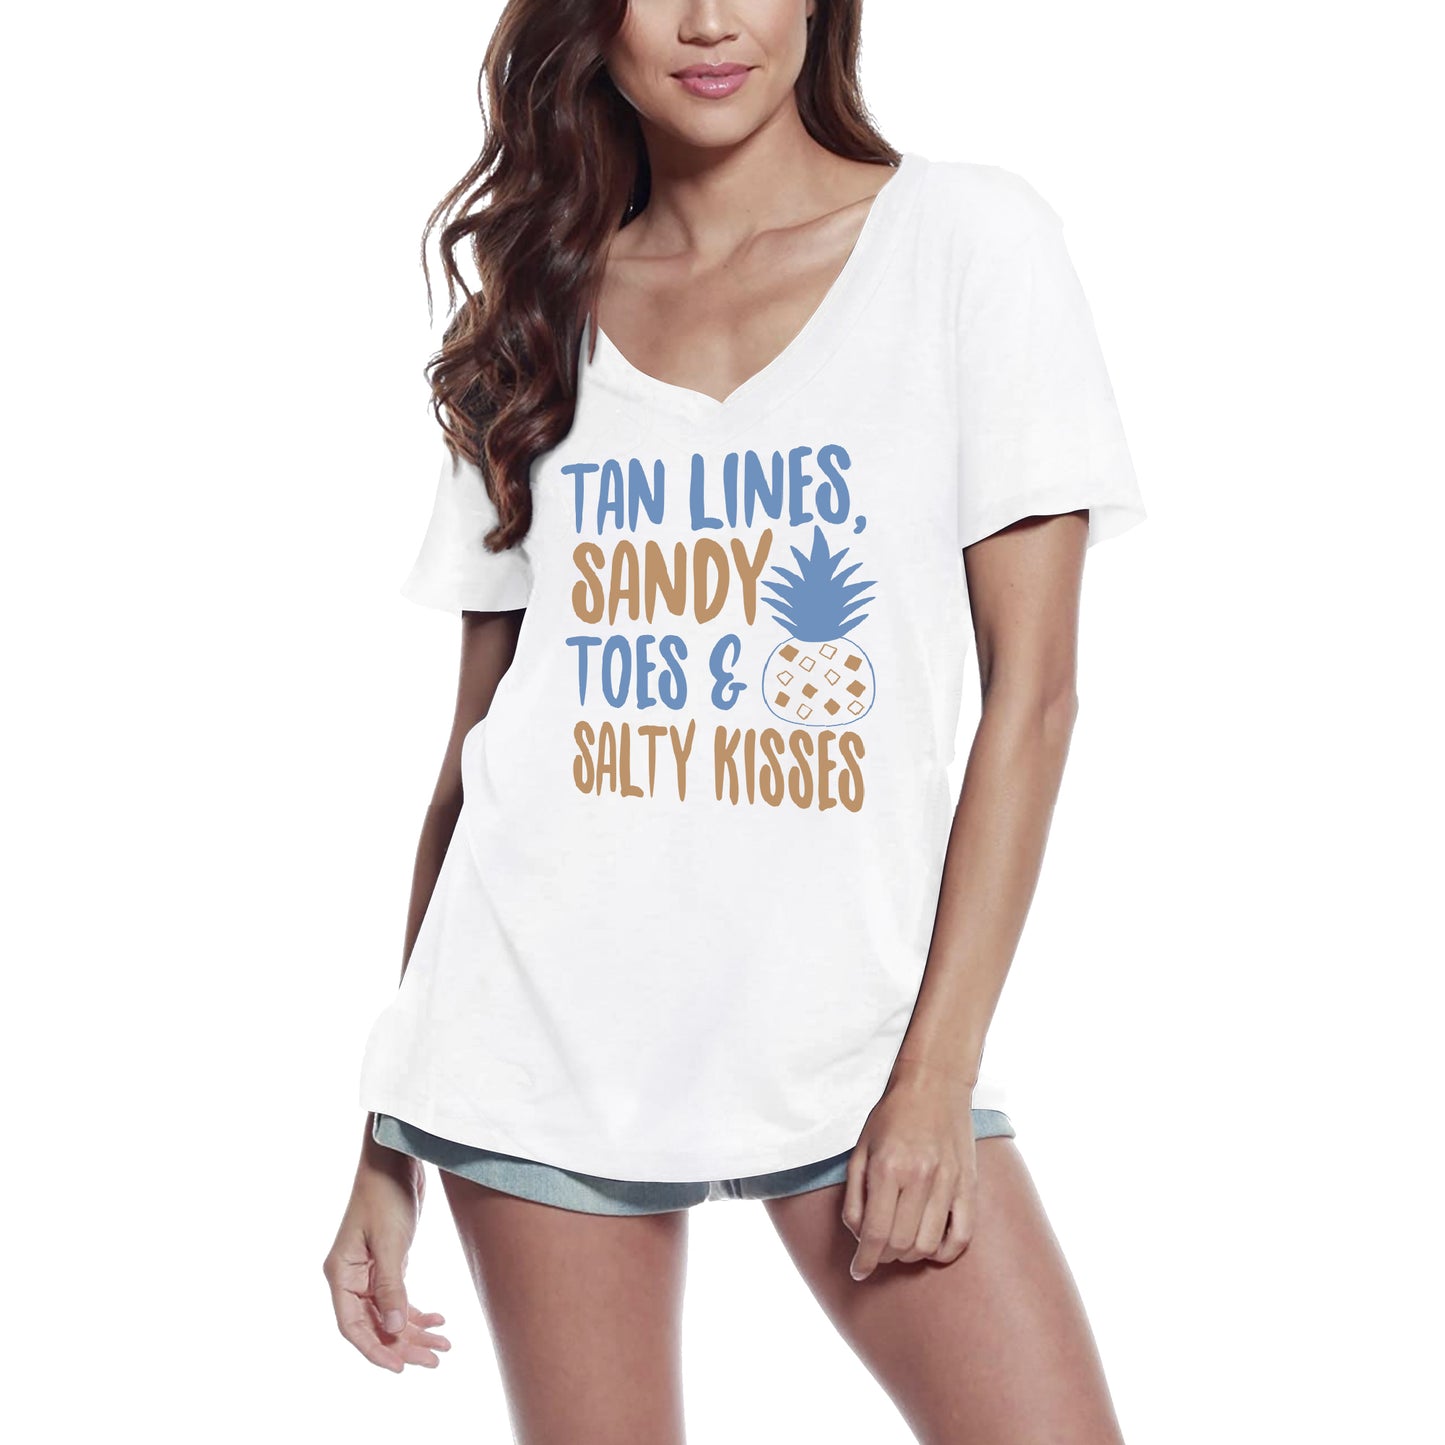 ULTRABASIC Women's T-Shirt Tan Lines Sandy Toes and Salty Kisses - Short Sleeve Tee Shirt Tops